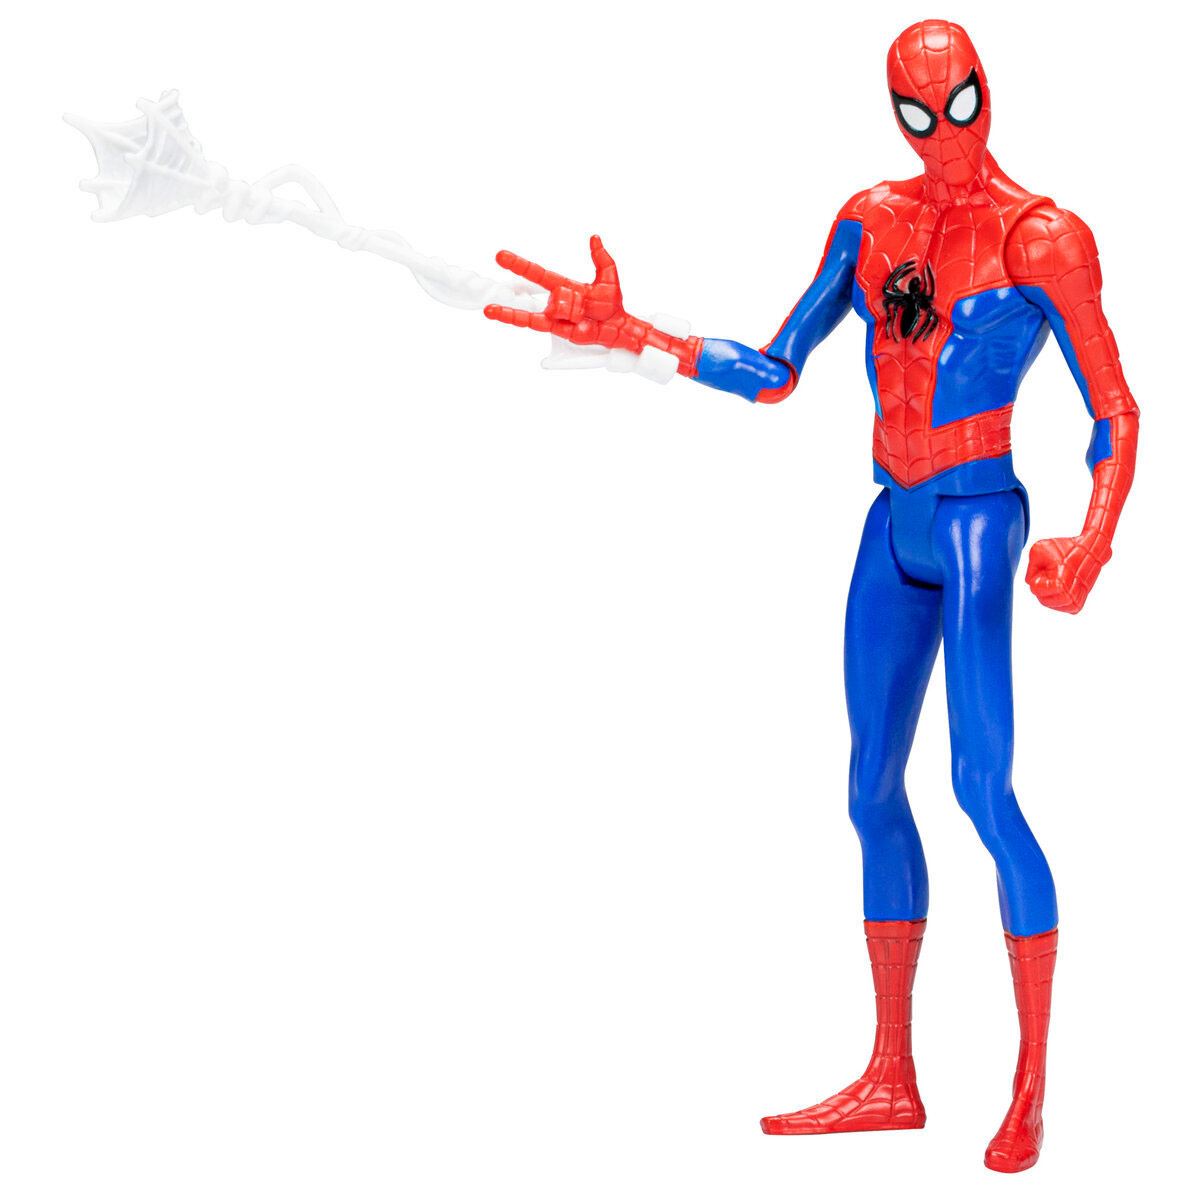 Figura hinchable spider-man 60 cm. Juguetes Don Dino